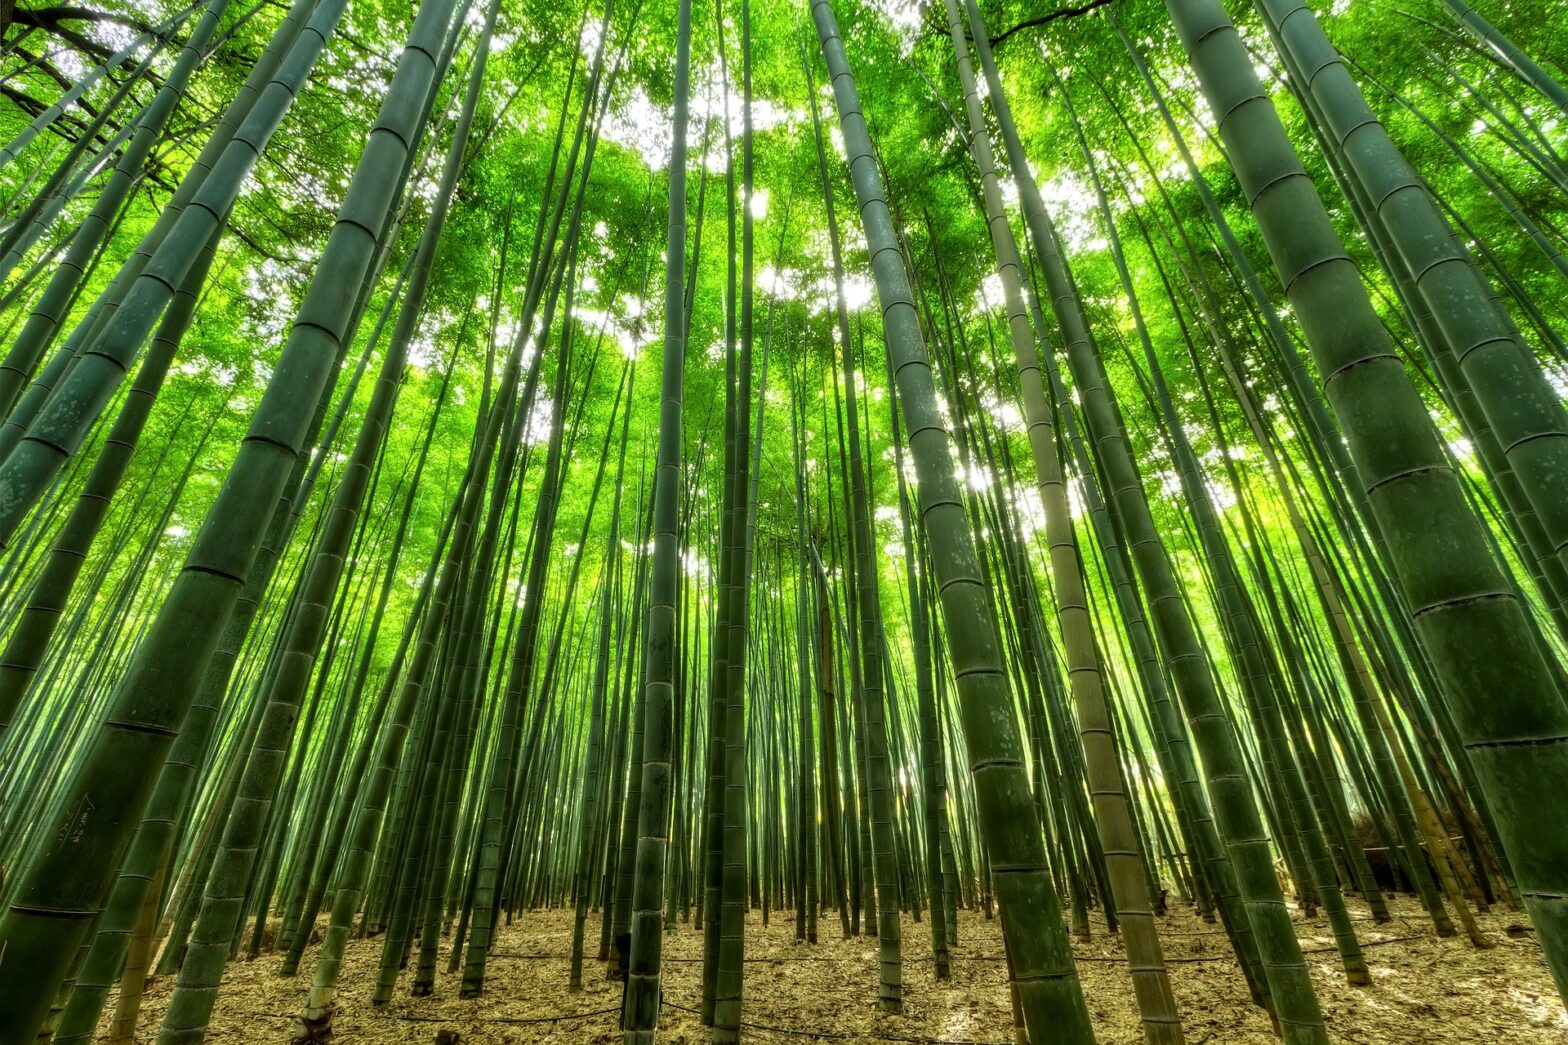 Bamboo growing in sunlight